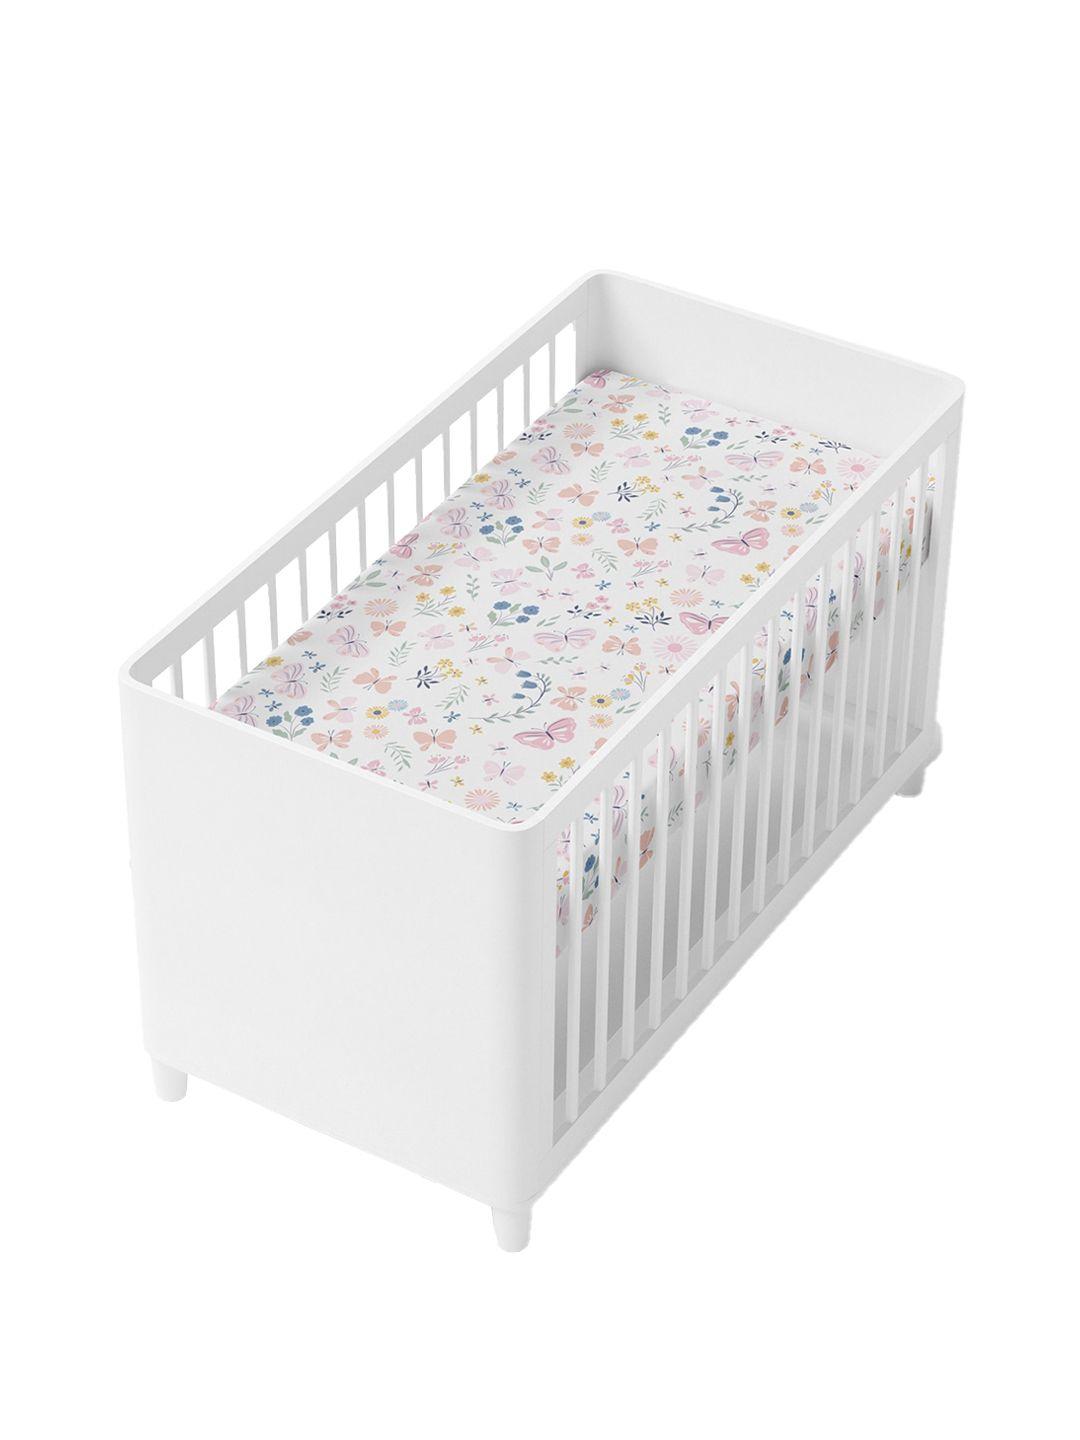 haus & kinder kids pack of 5 printed baby bed sets